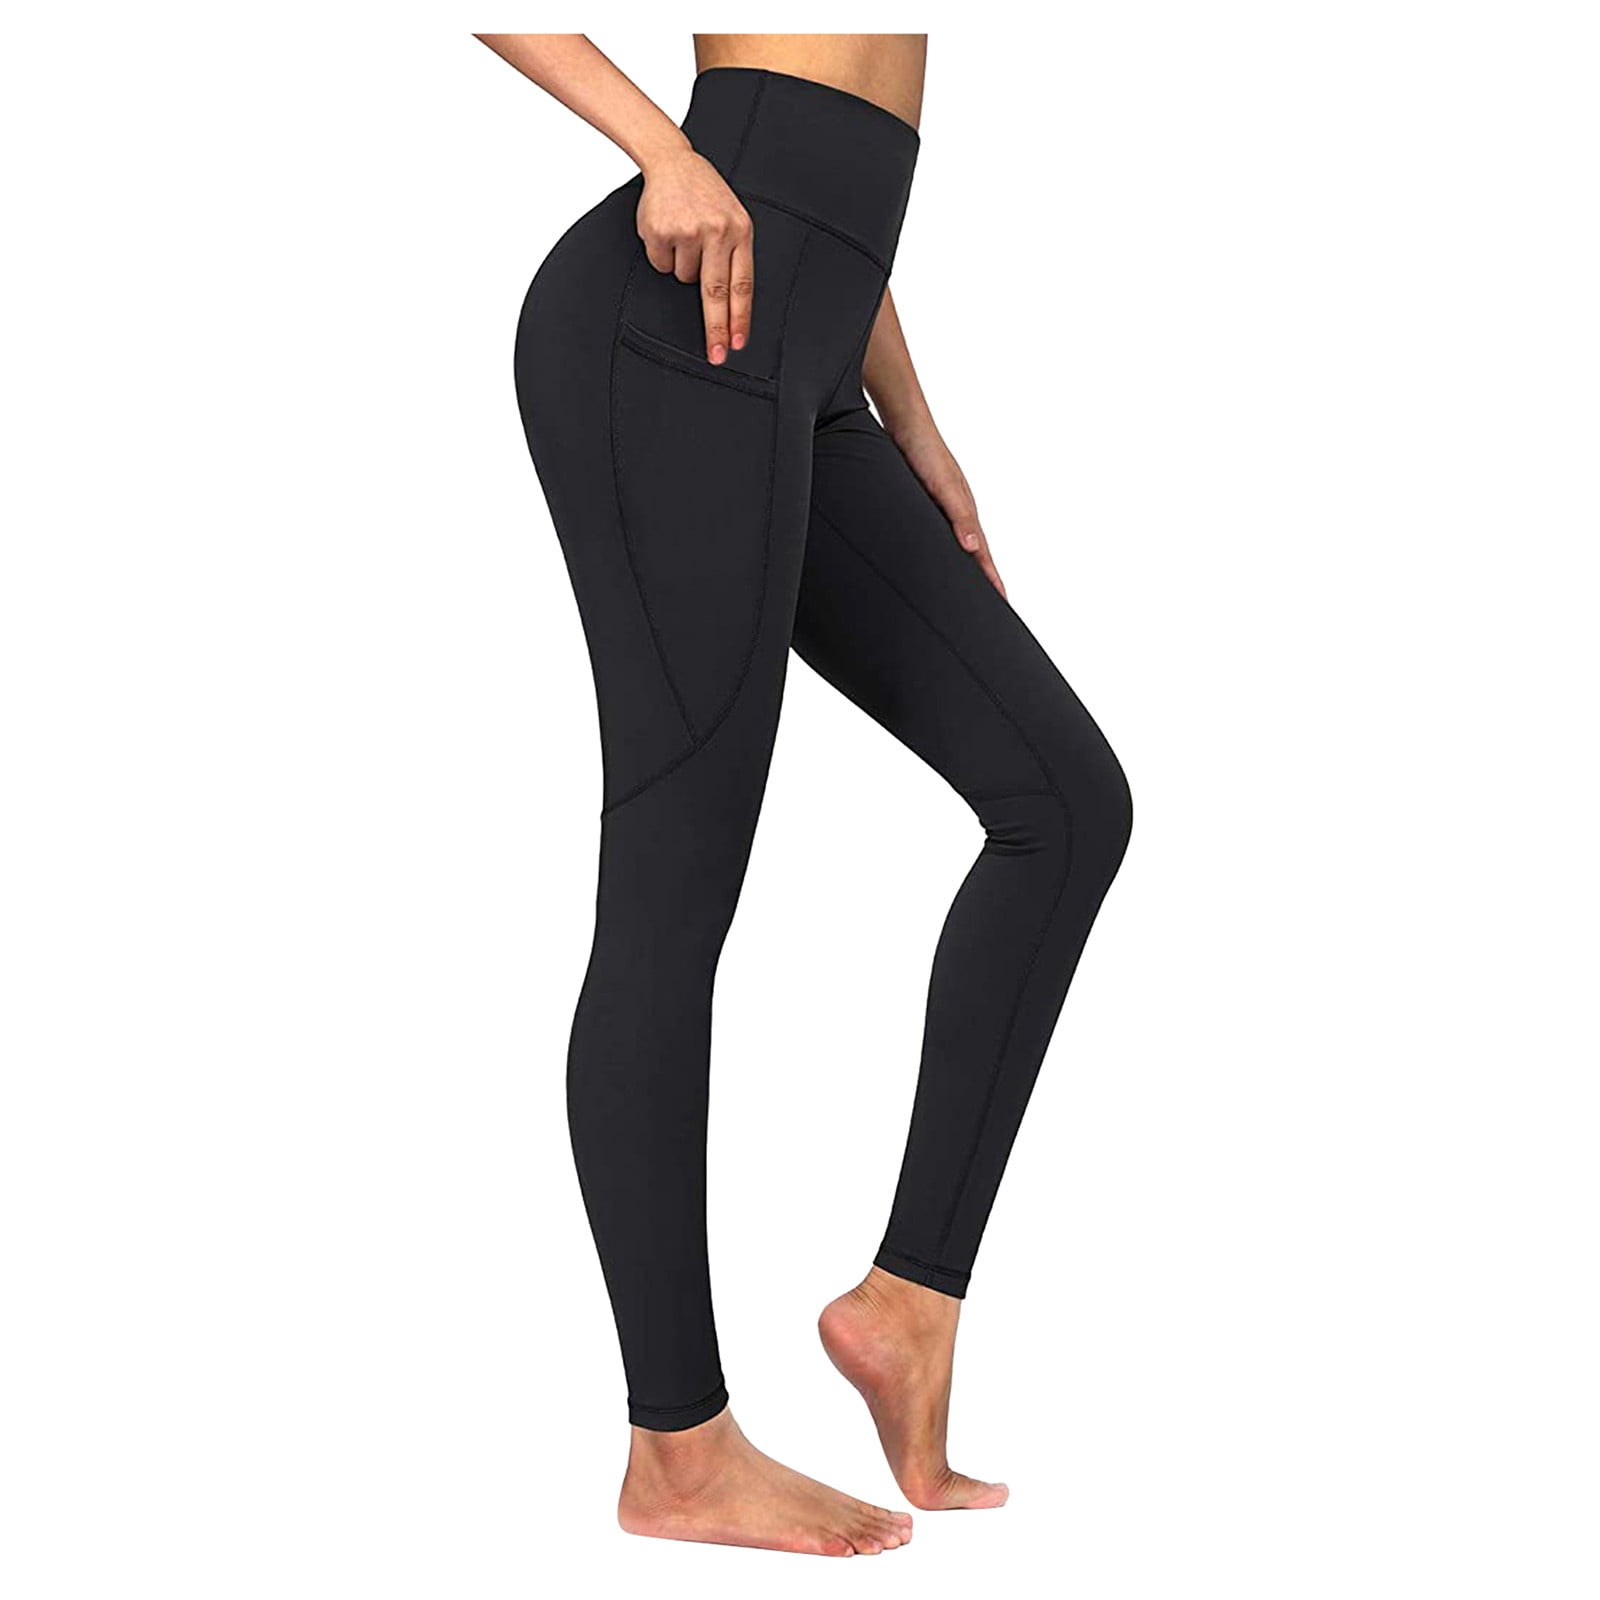 Workout Running Print Leggings Fitness Women's Yoga Sports Pants